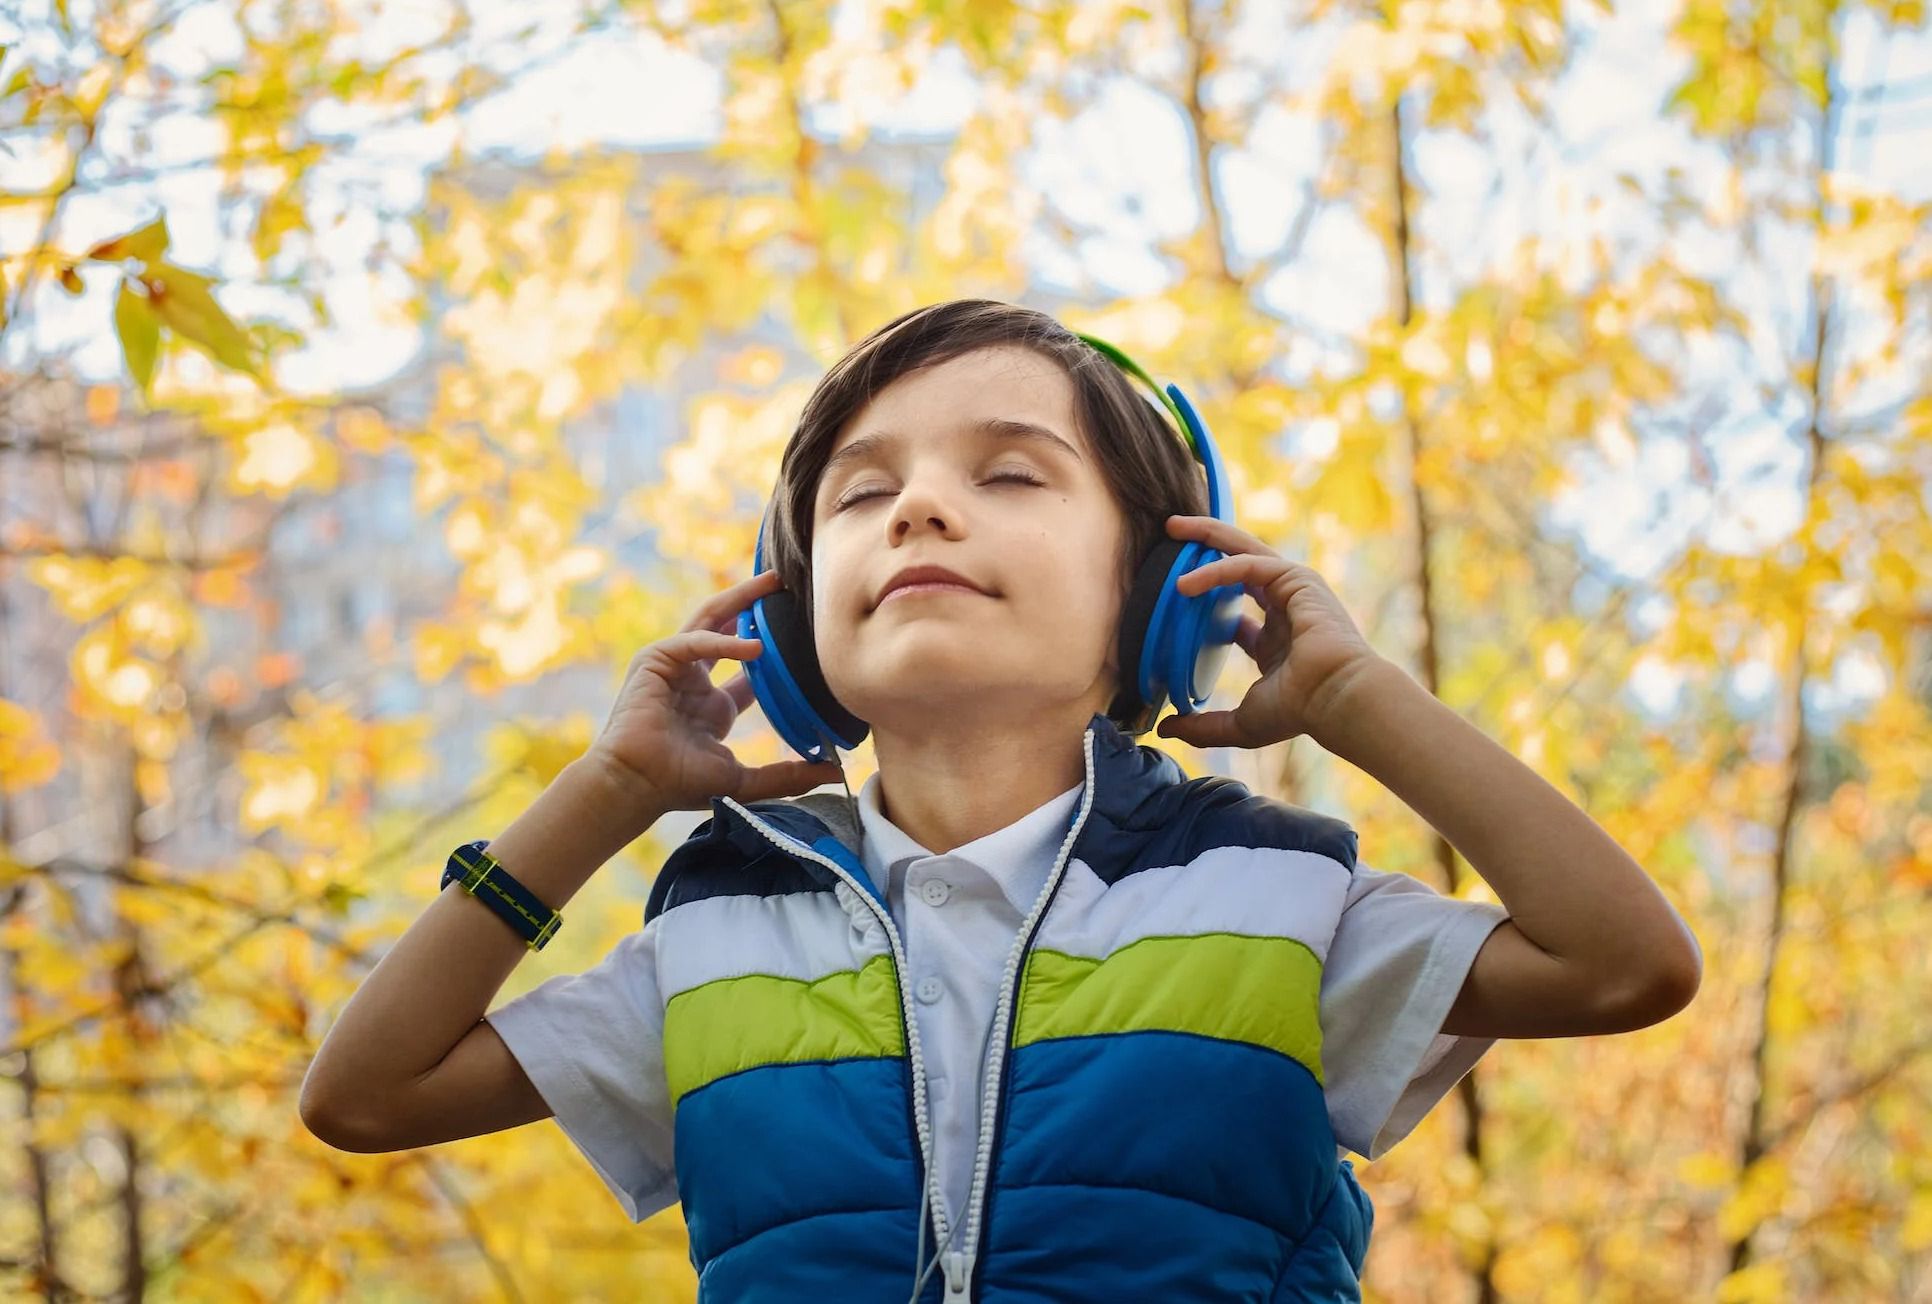 Музыка важна для детей